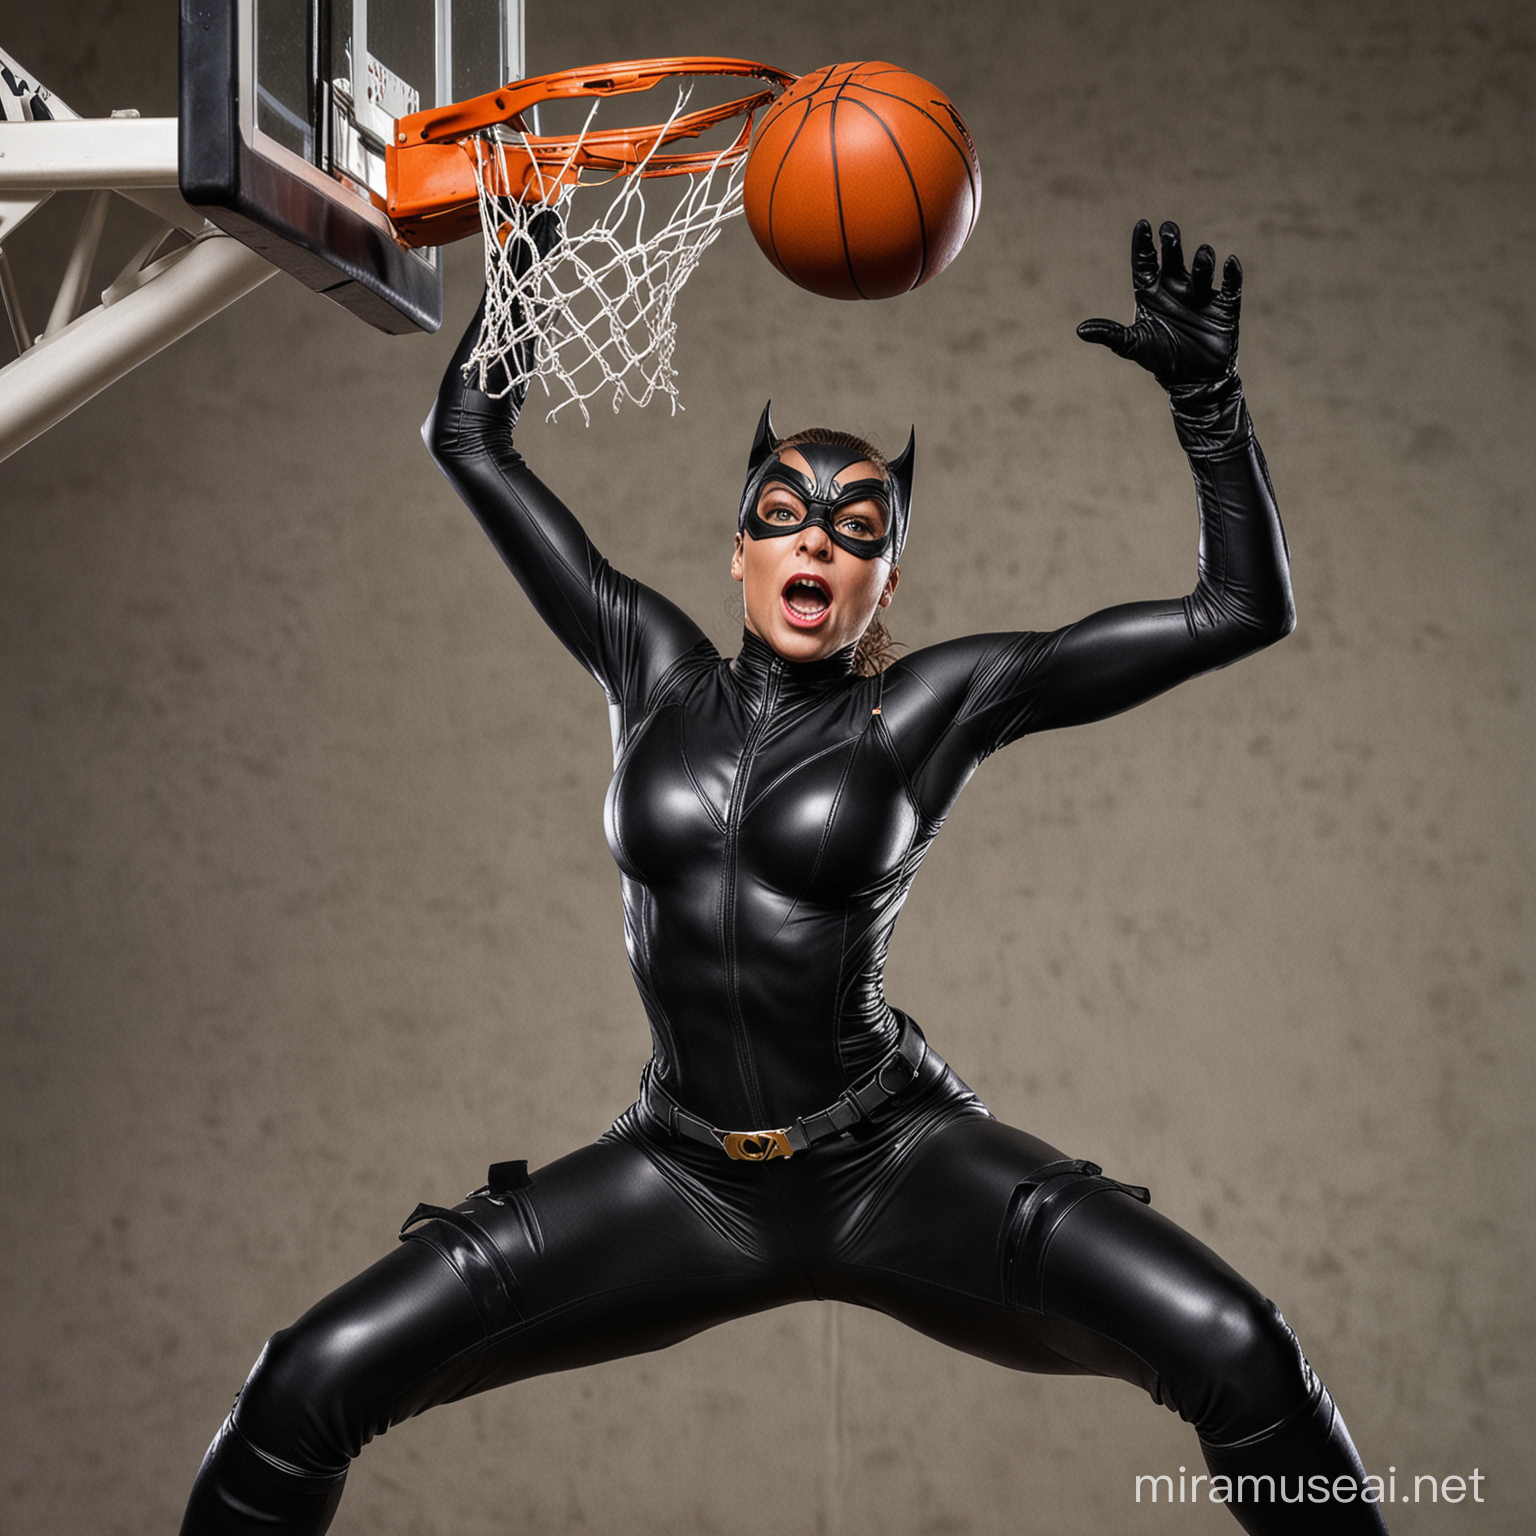 Catwoman slam dunking a basketball